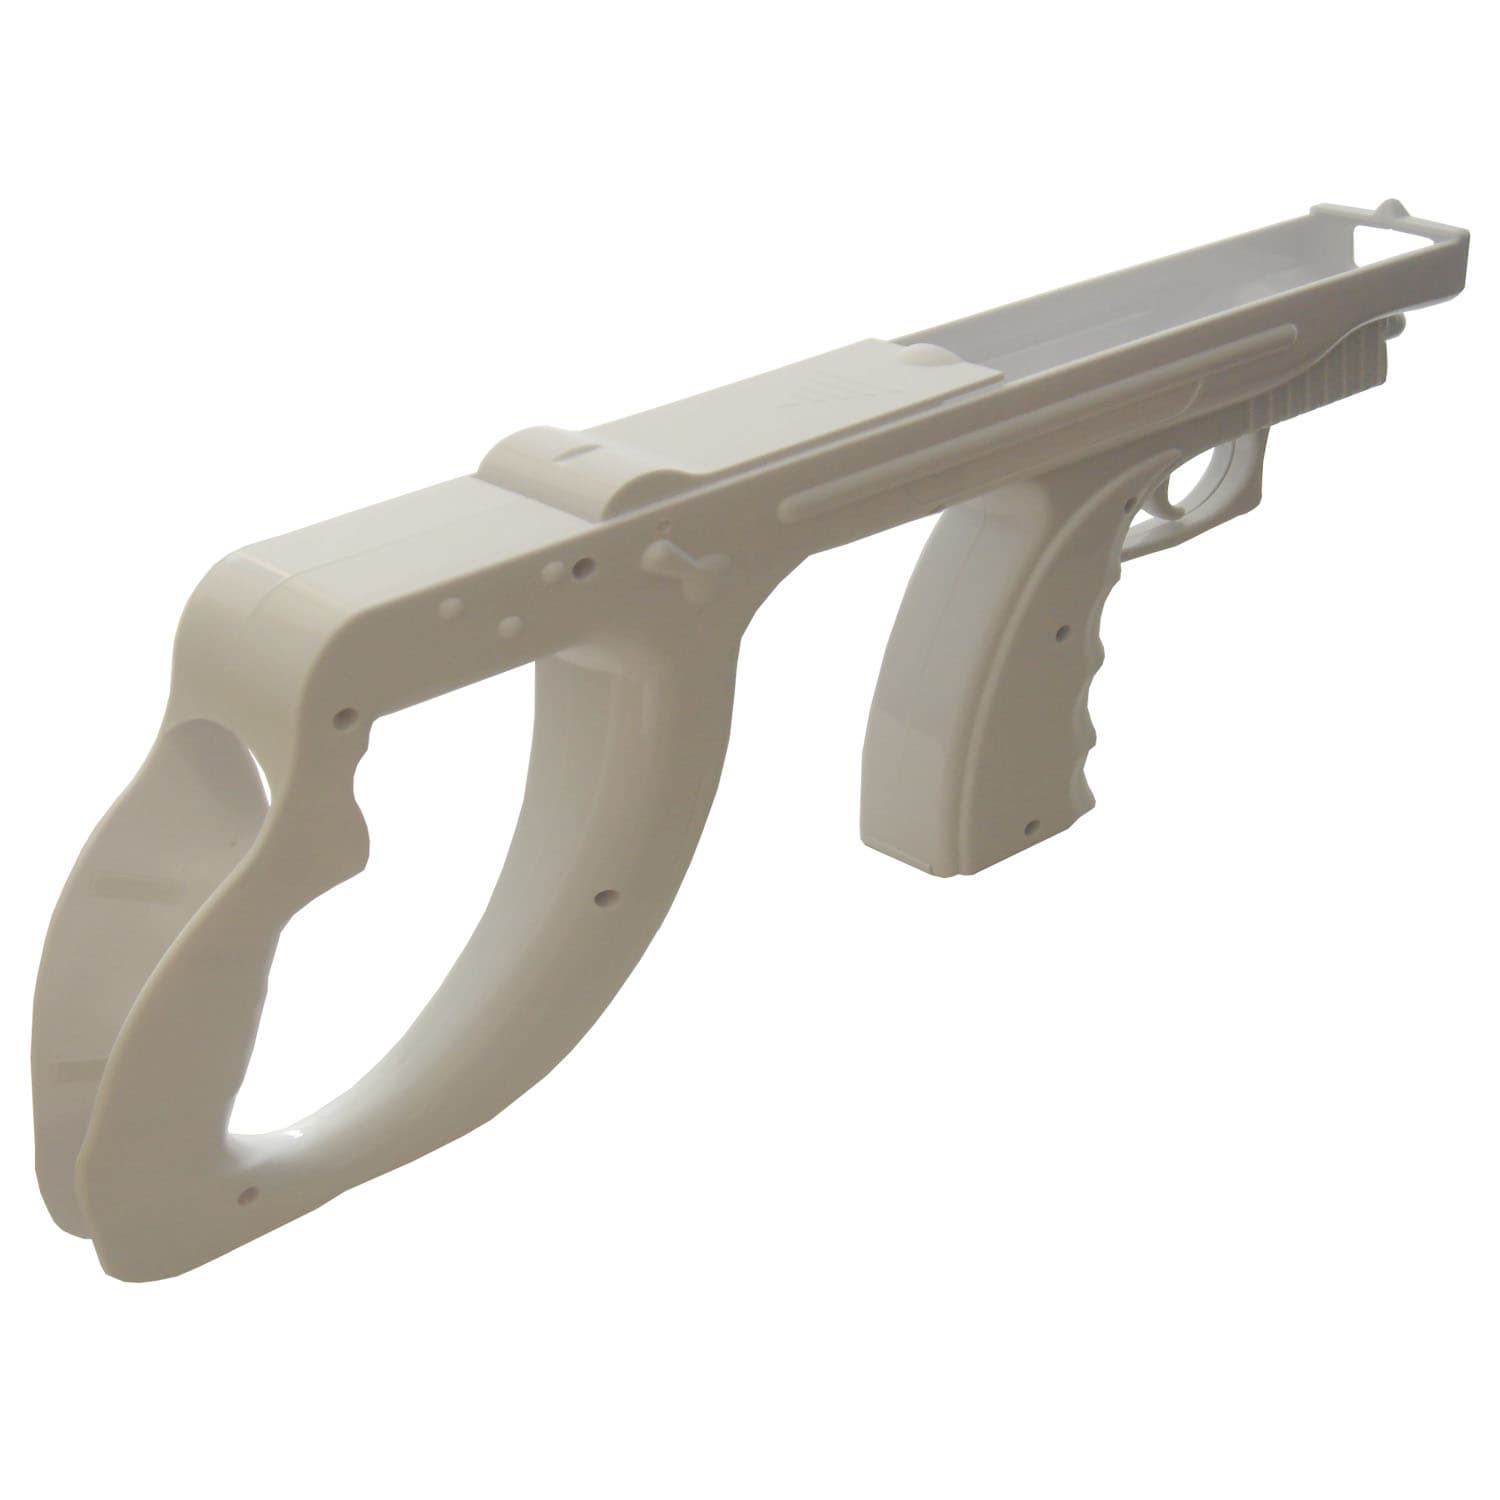 Combined light gun for Wii